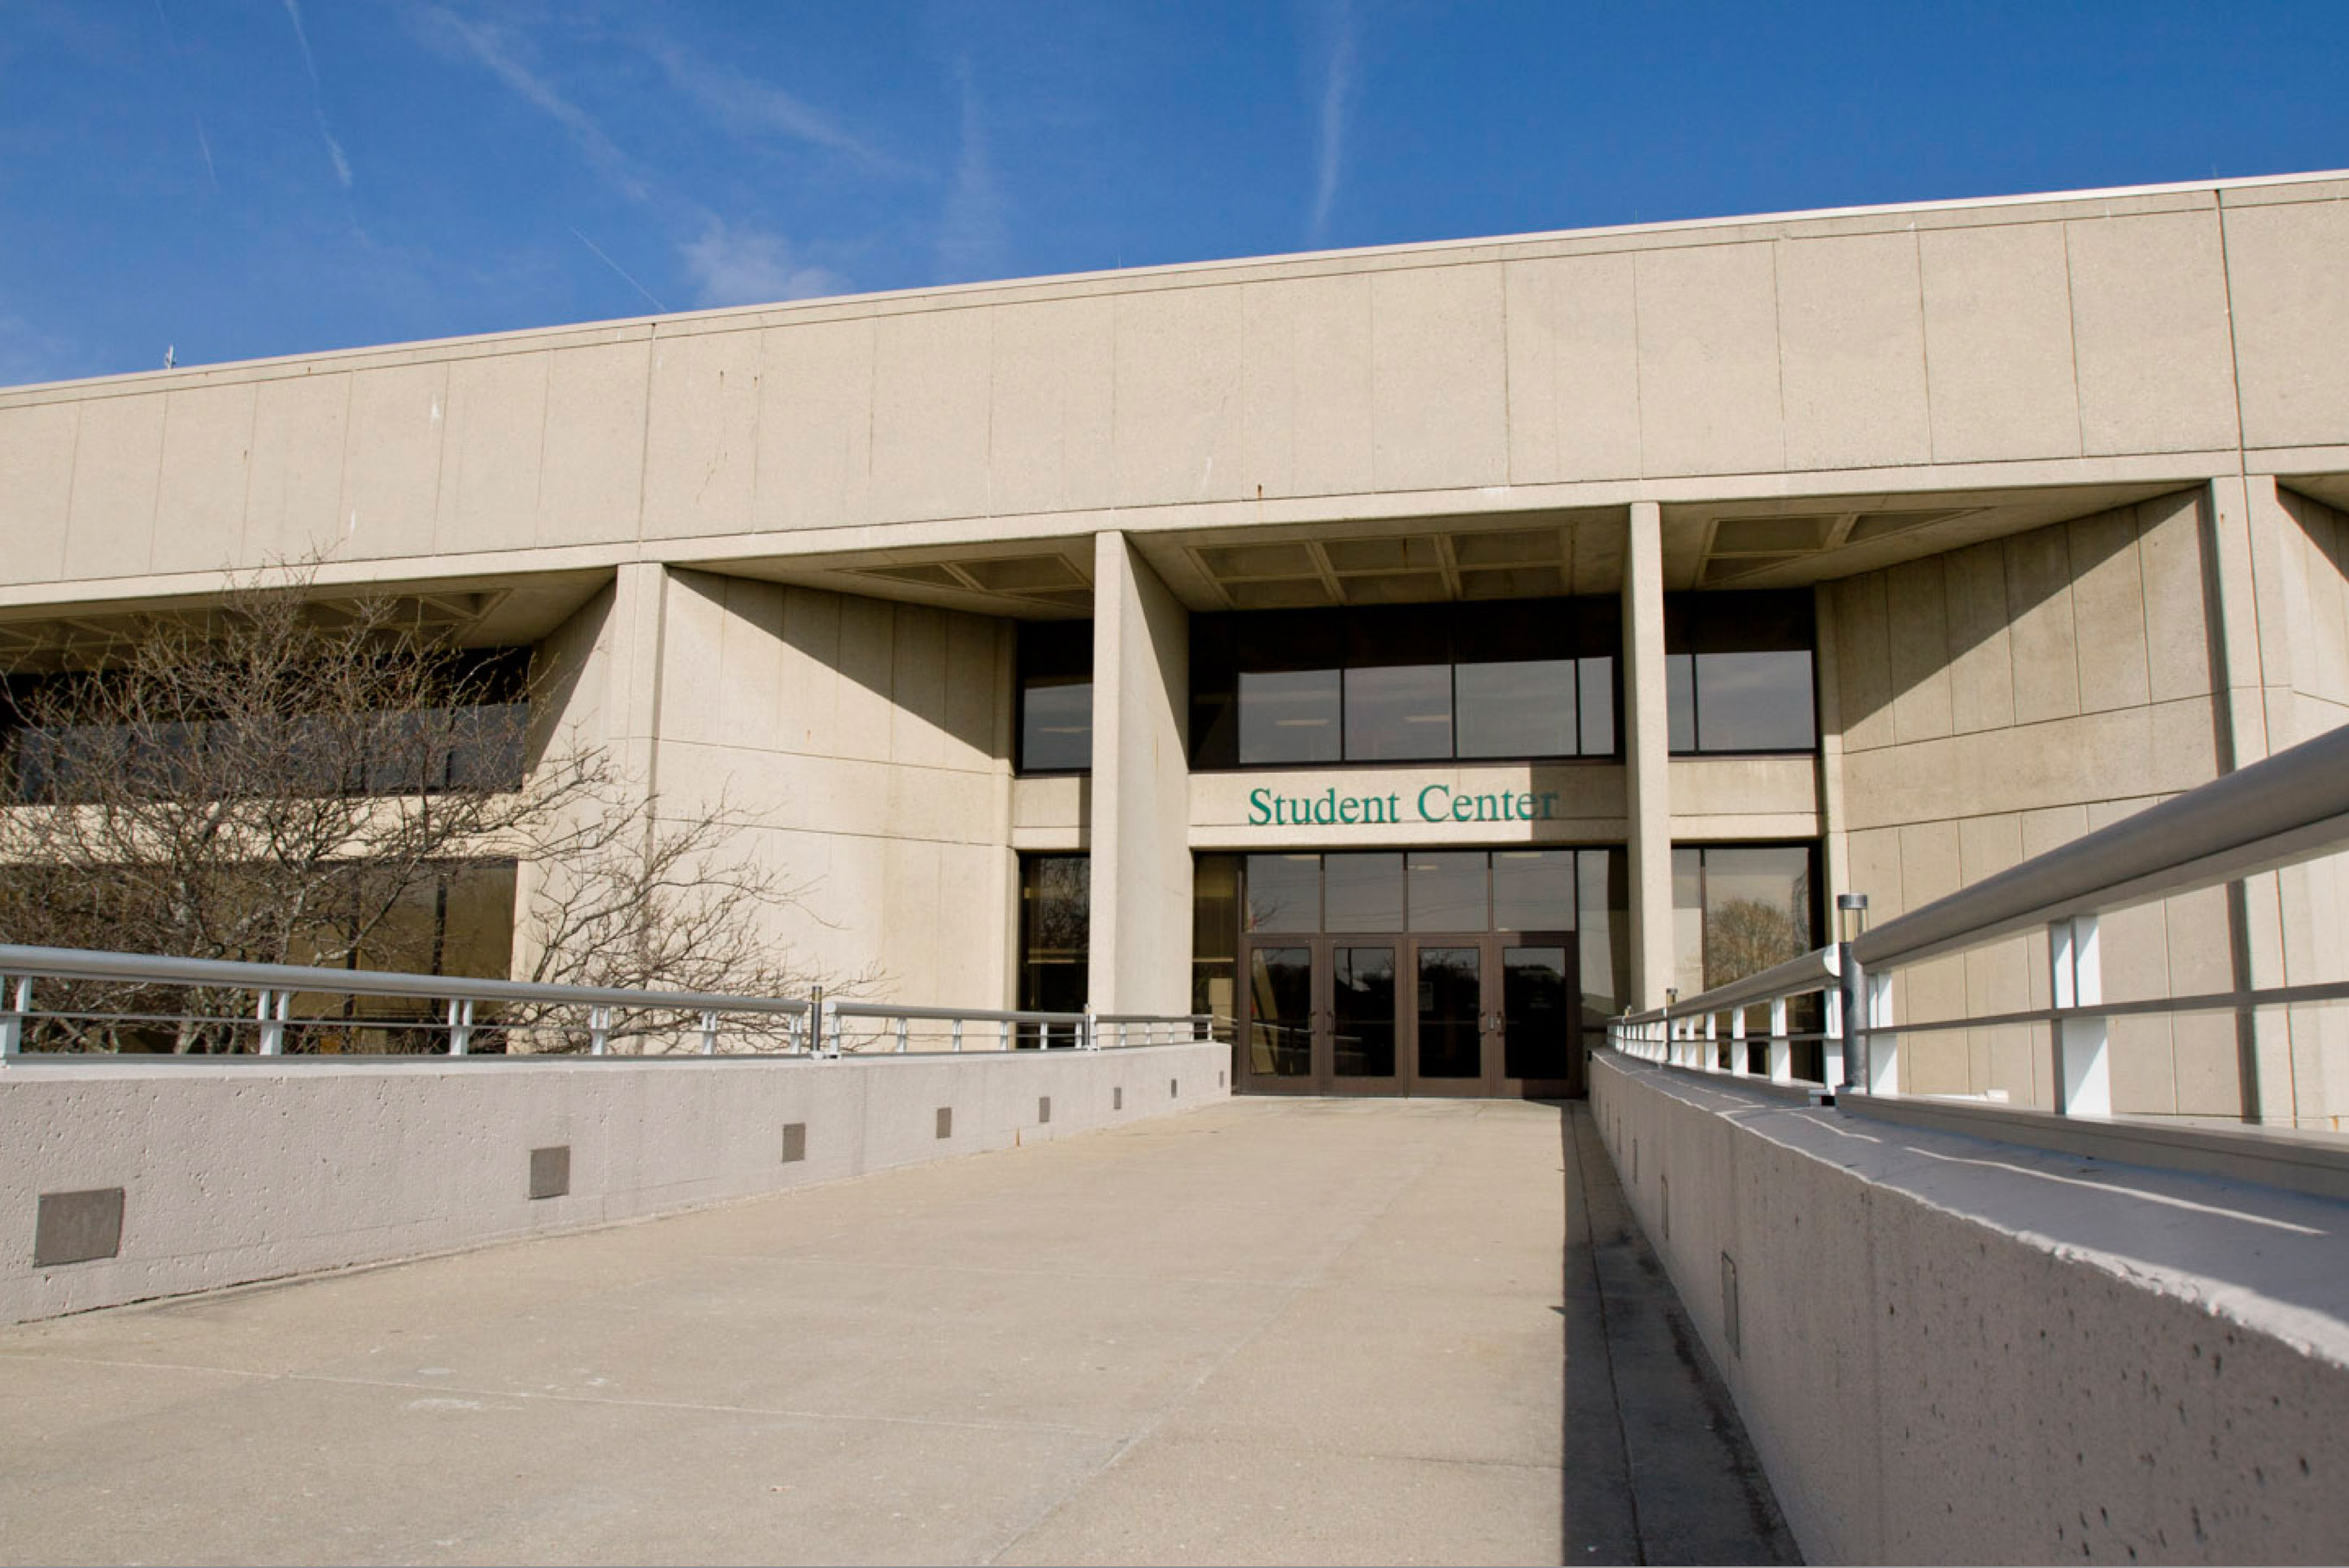 Student Center Building